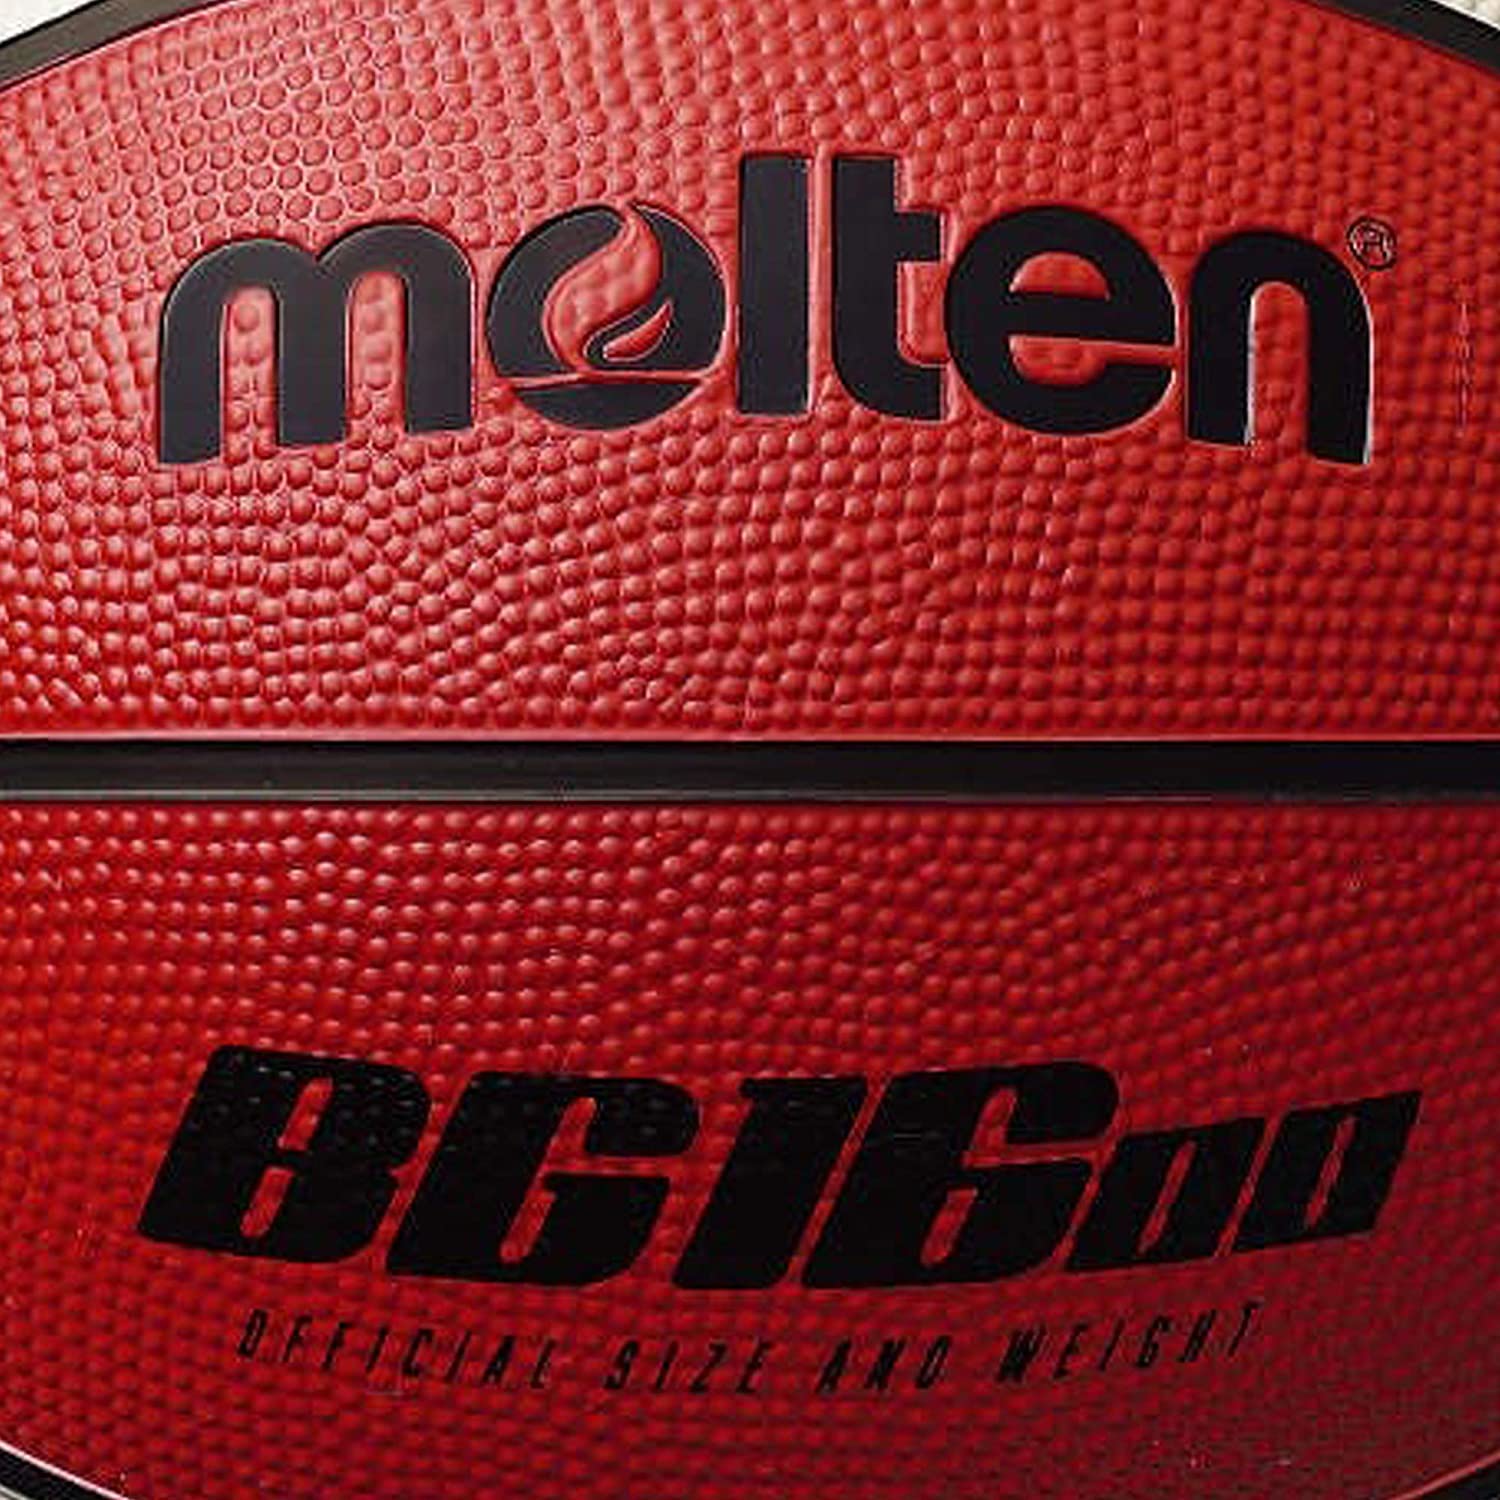 Ballons de basket BG1600 T5